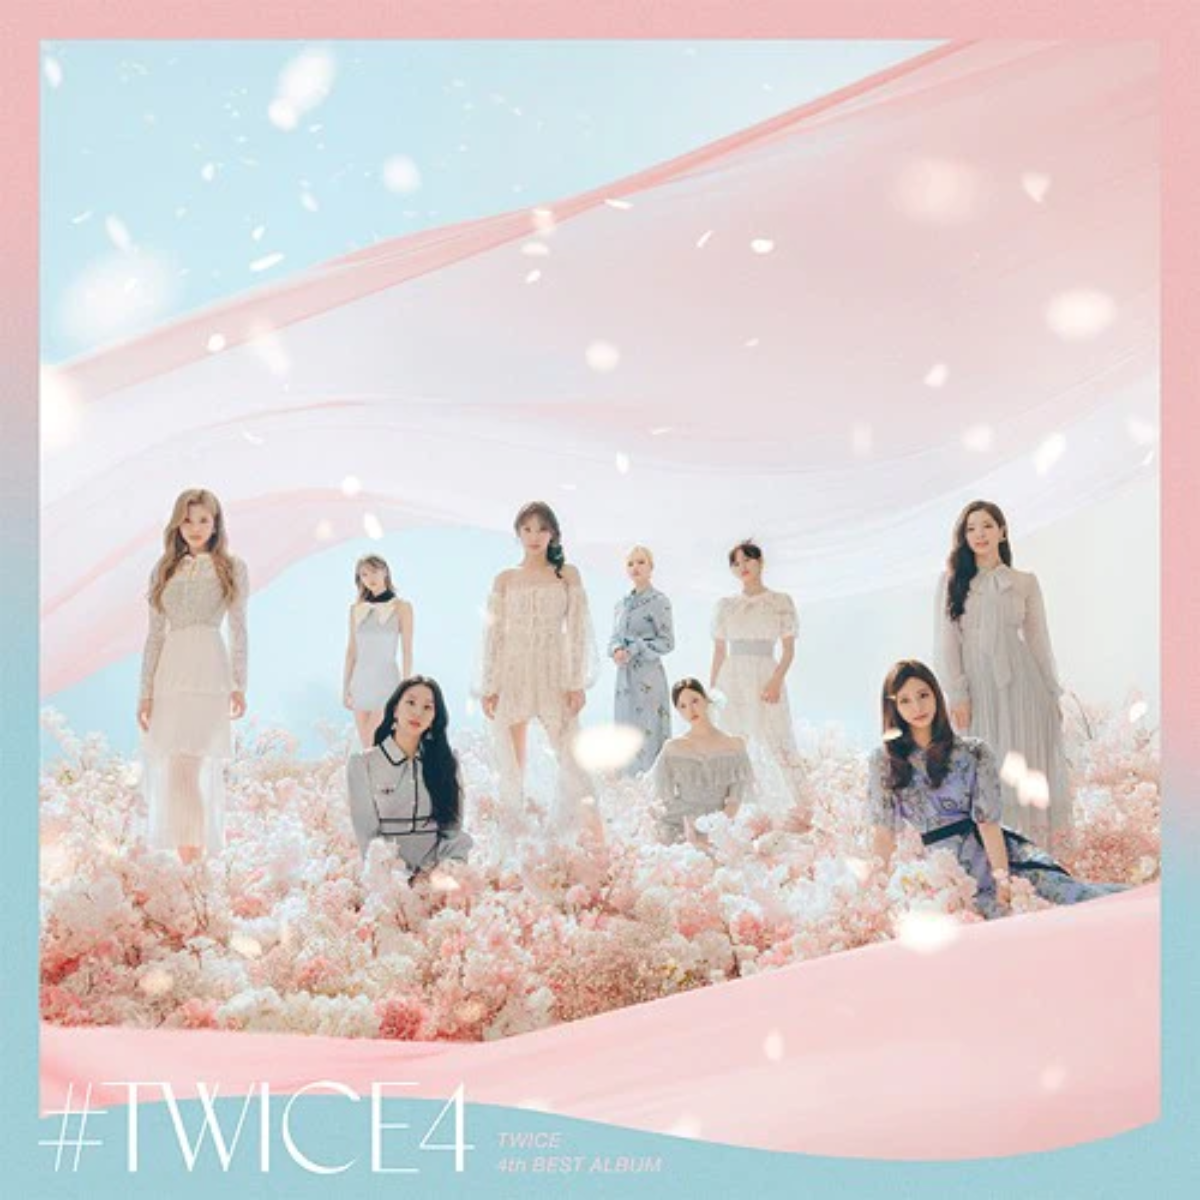 TWICE - #TWICE4 (Normal Edition) (Japan Version)